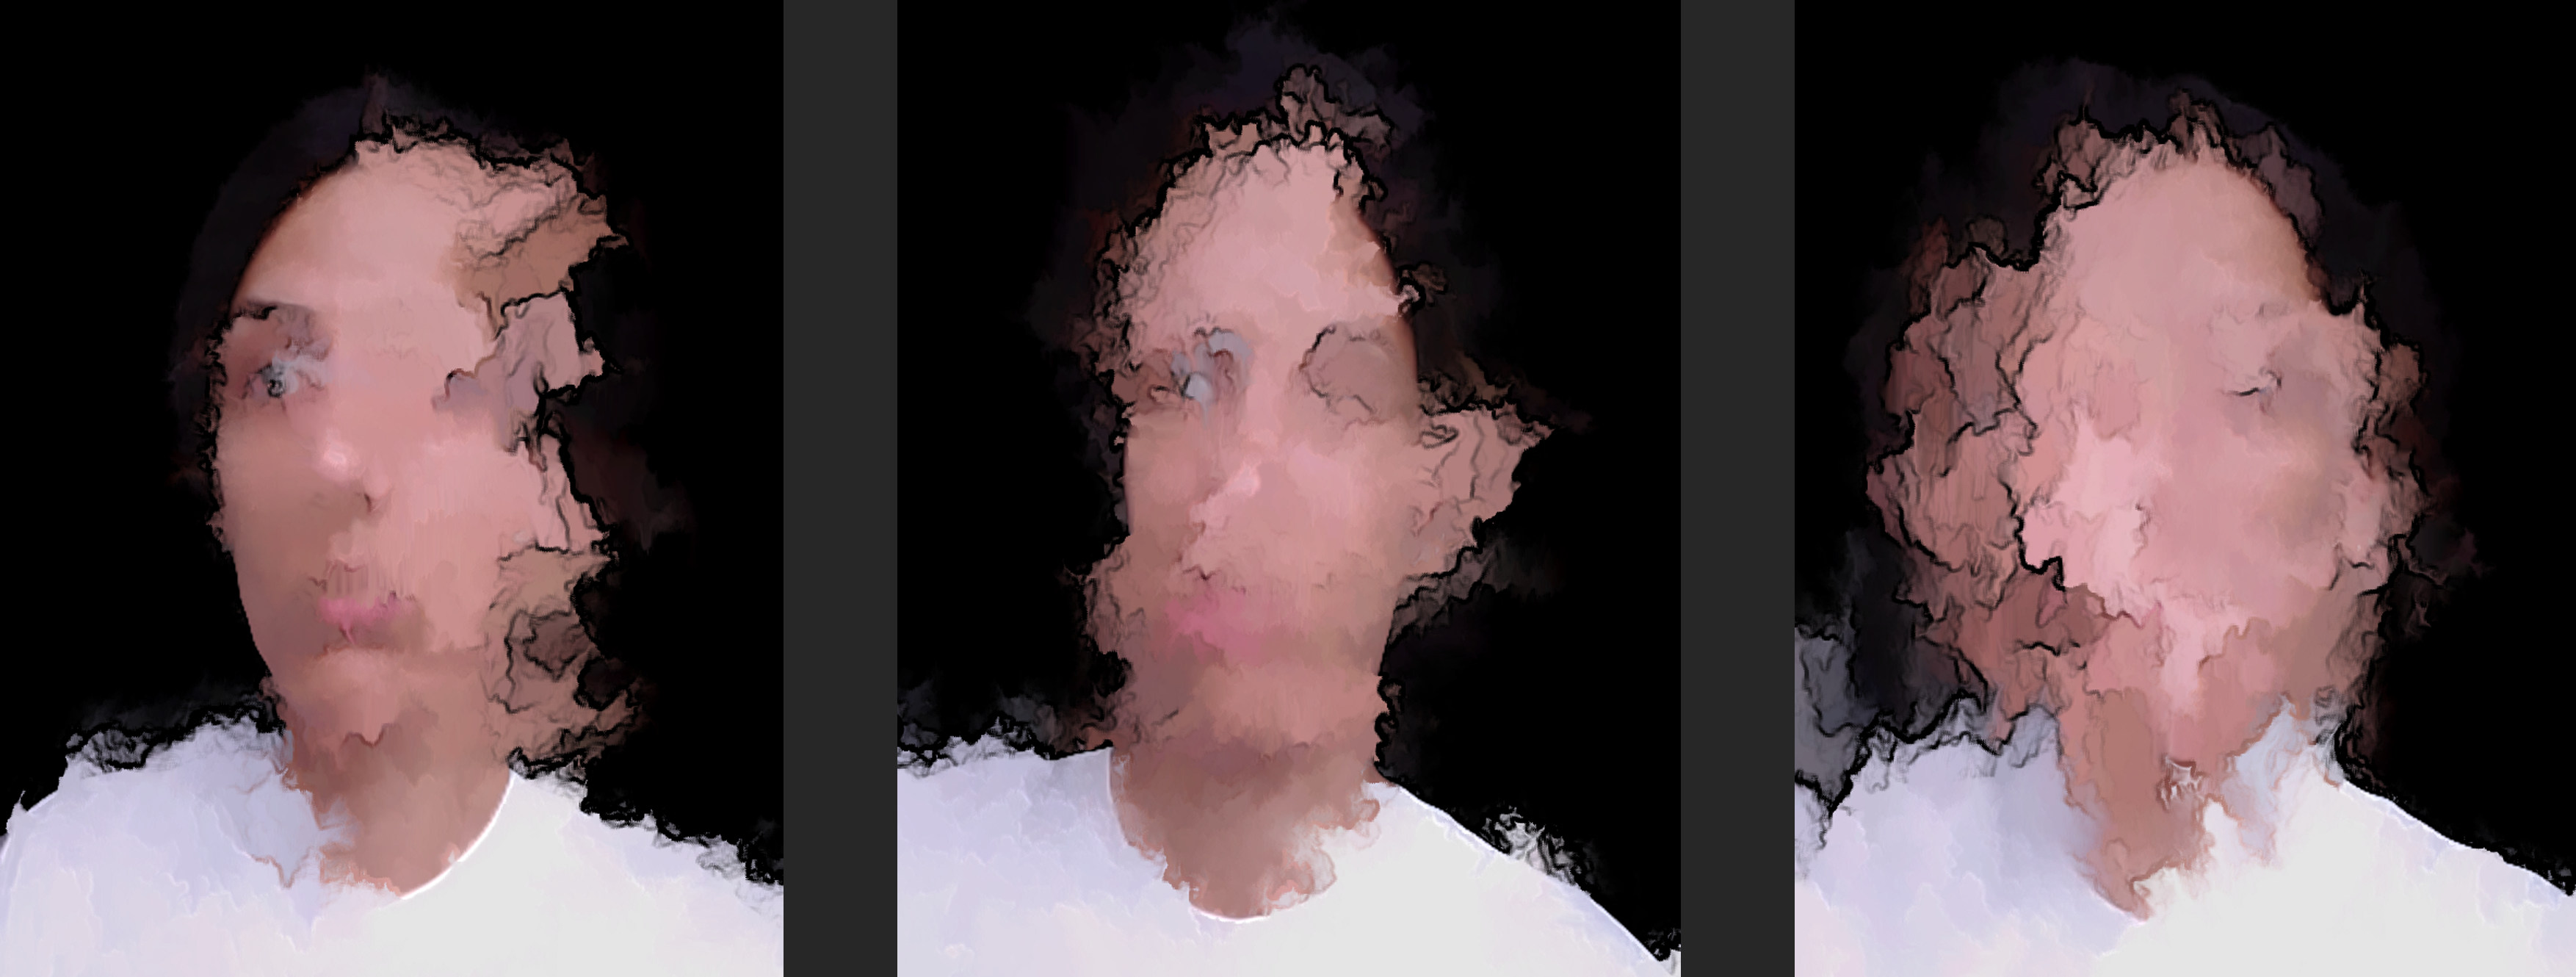 distortion of portrait